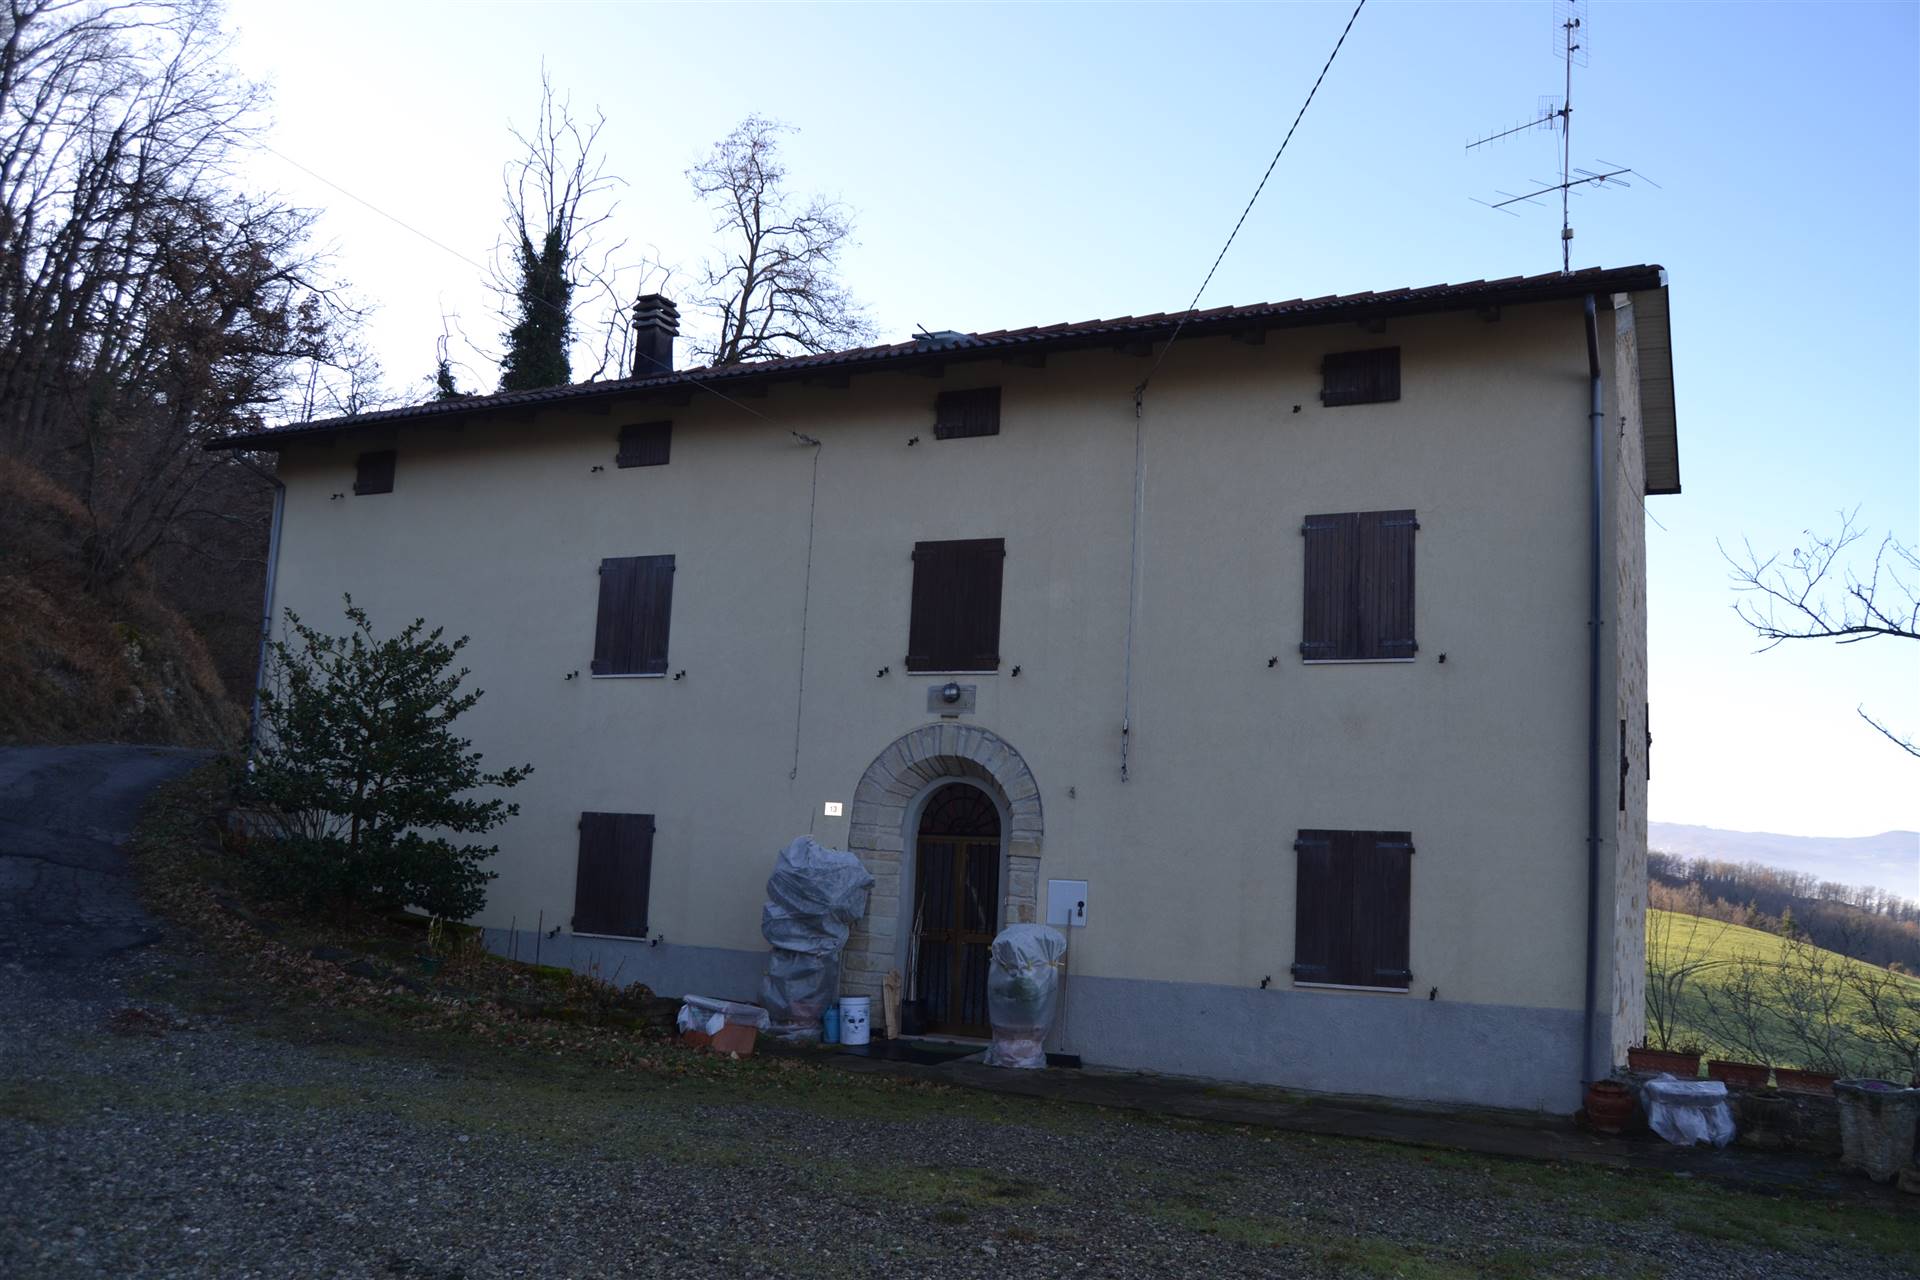 Rustico casale in zona Monteacuto Vallese a San Benedetto Val di Sambro